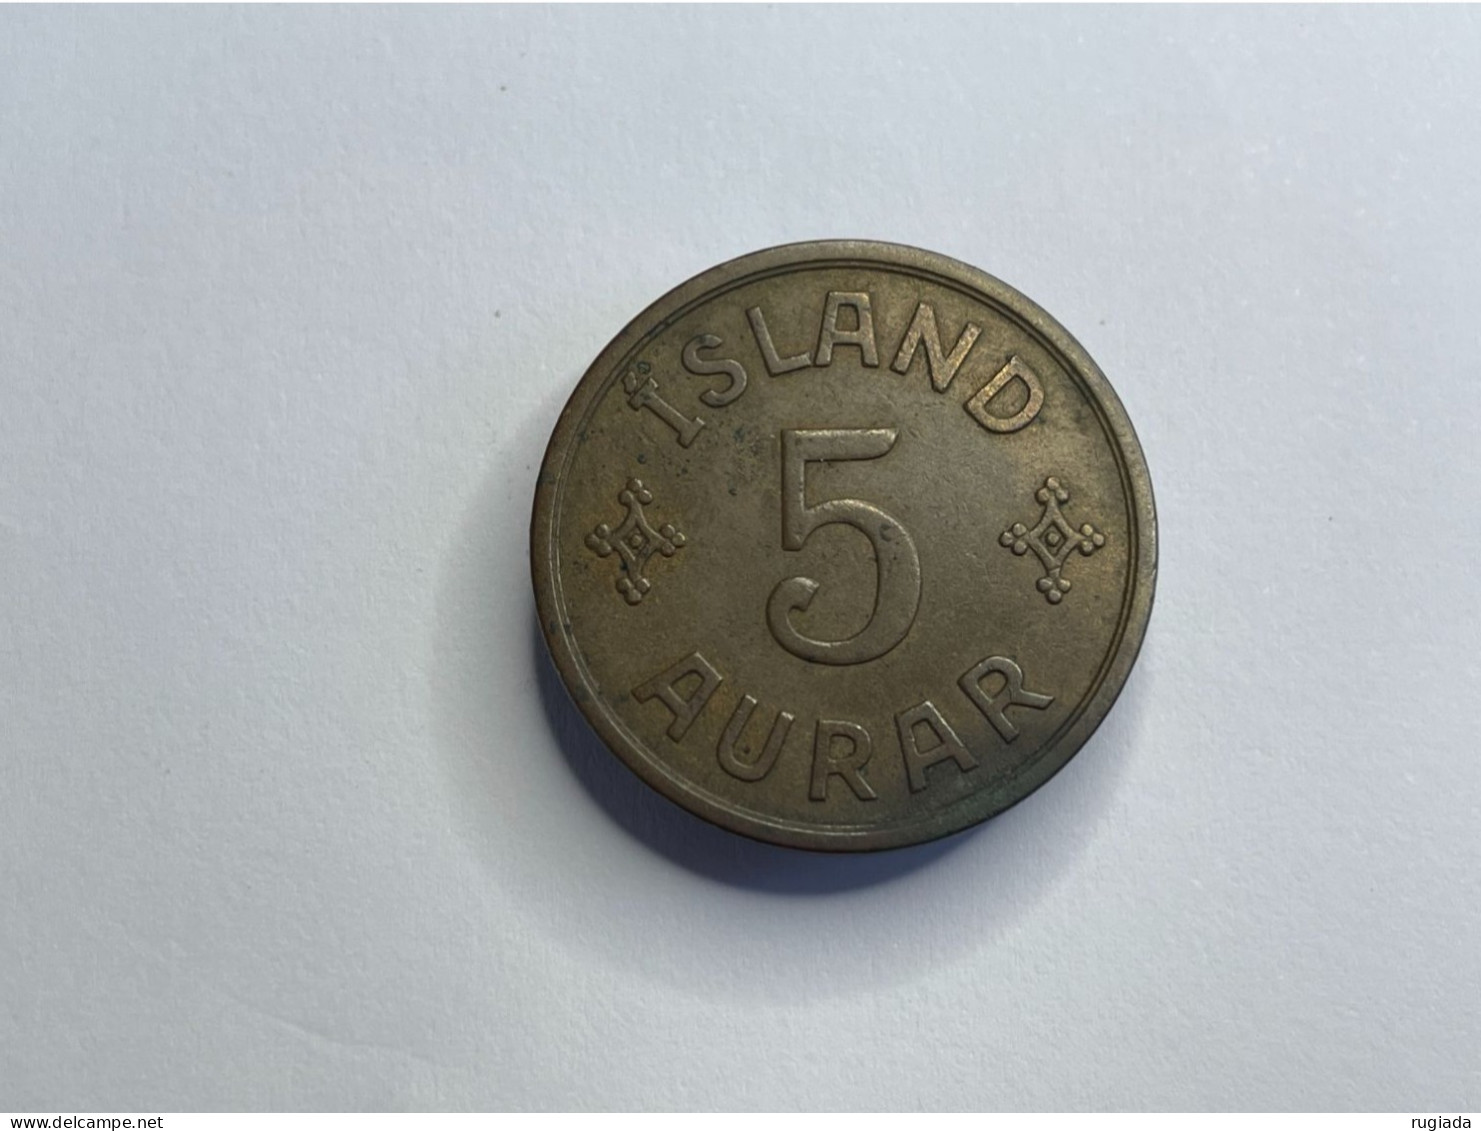 1931 (GJ N) Iceland 5 Aurar, VF Very Fine, Scarce Mint Mark - Islande